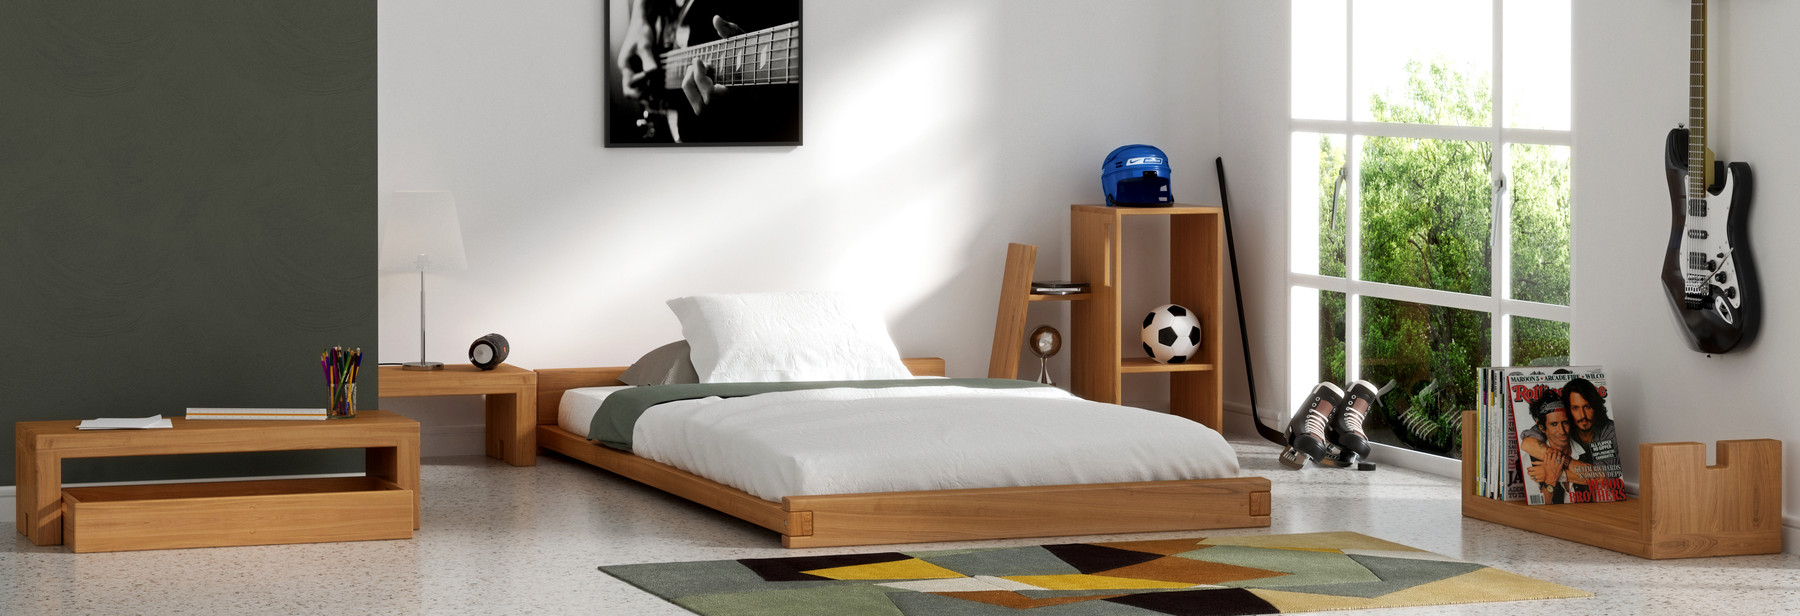 Minimalist teenager bedroom with solid wood furniture